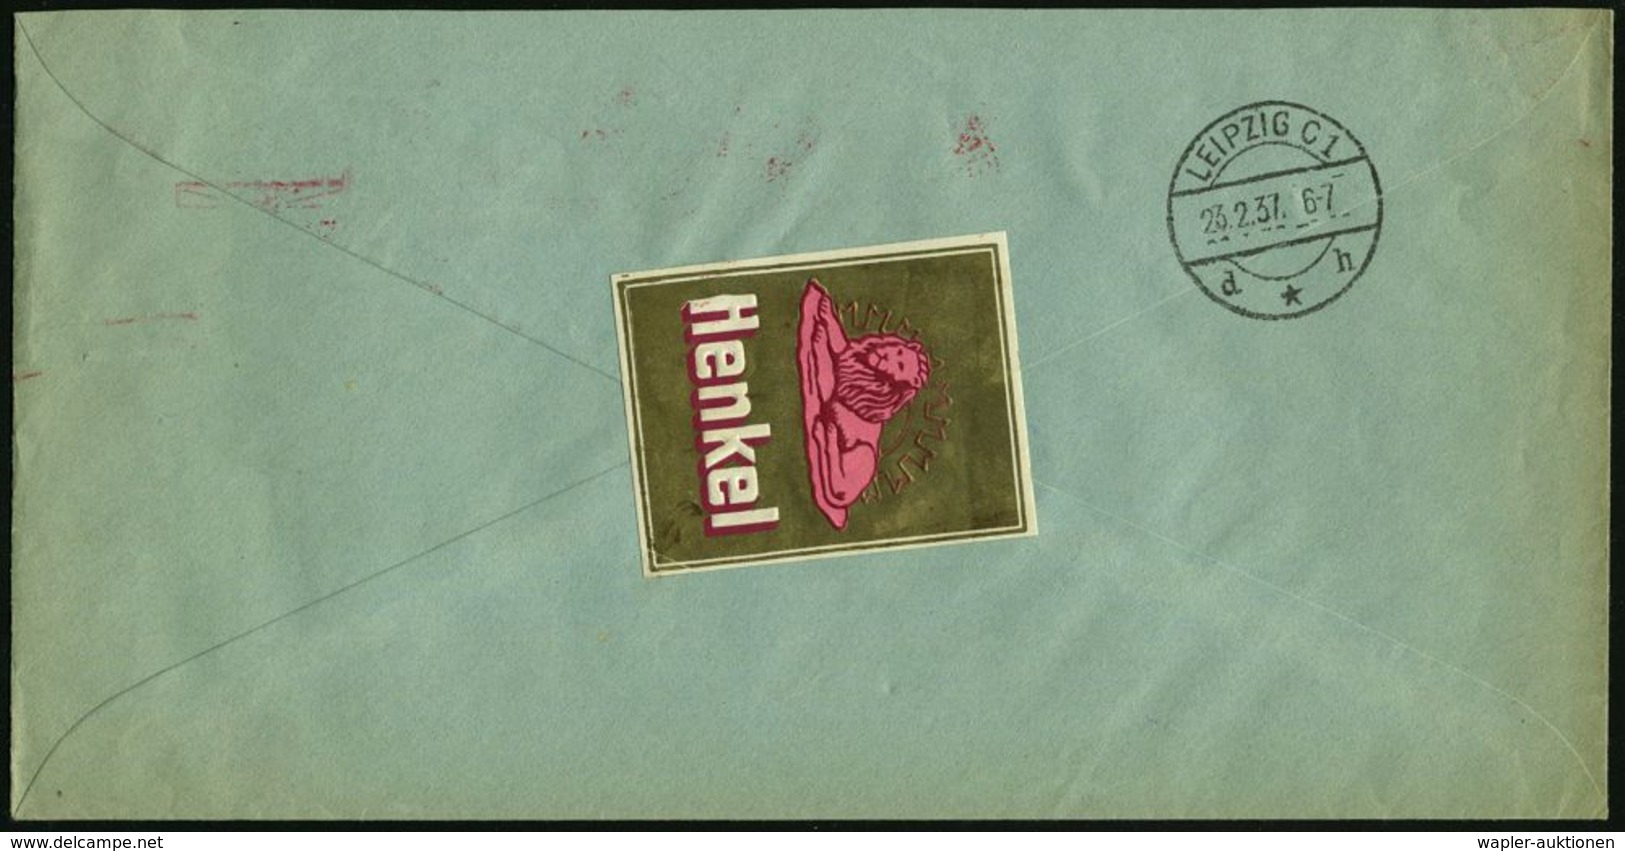 HYGIENE / KÖRPERPFLEGE : DÜSSELDORF-HOLTHAUSEN/ Henkel 1937 (22.2.) AFS 042 Pf. = Löwe (vor Sonne) Rs. Motivgl. Firmen-V - Pharmacie